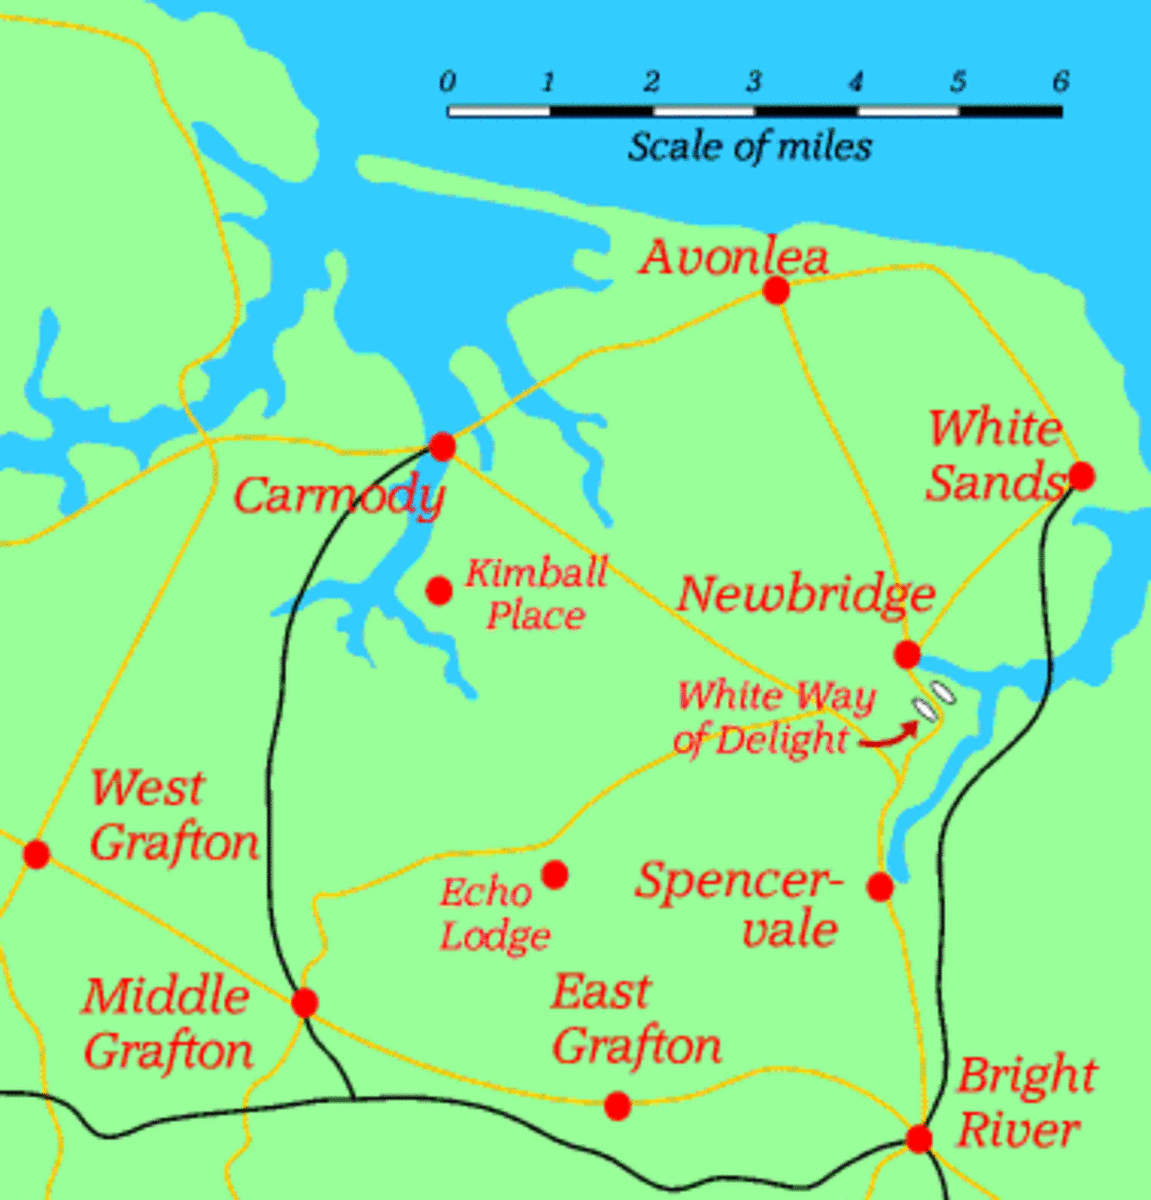 Map of Avonlea Region